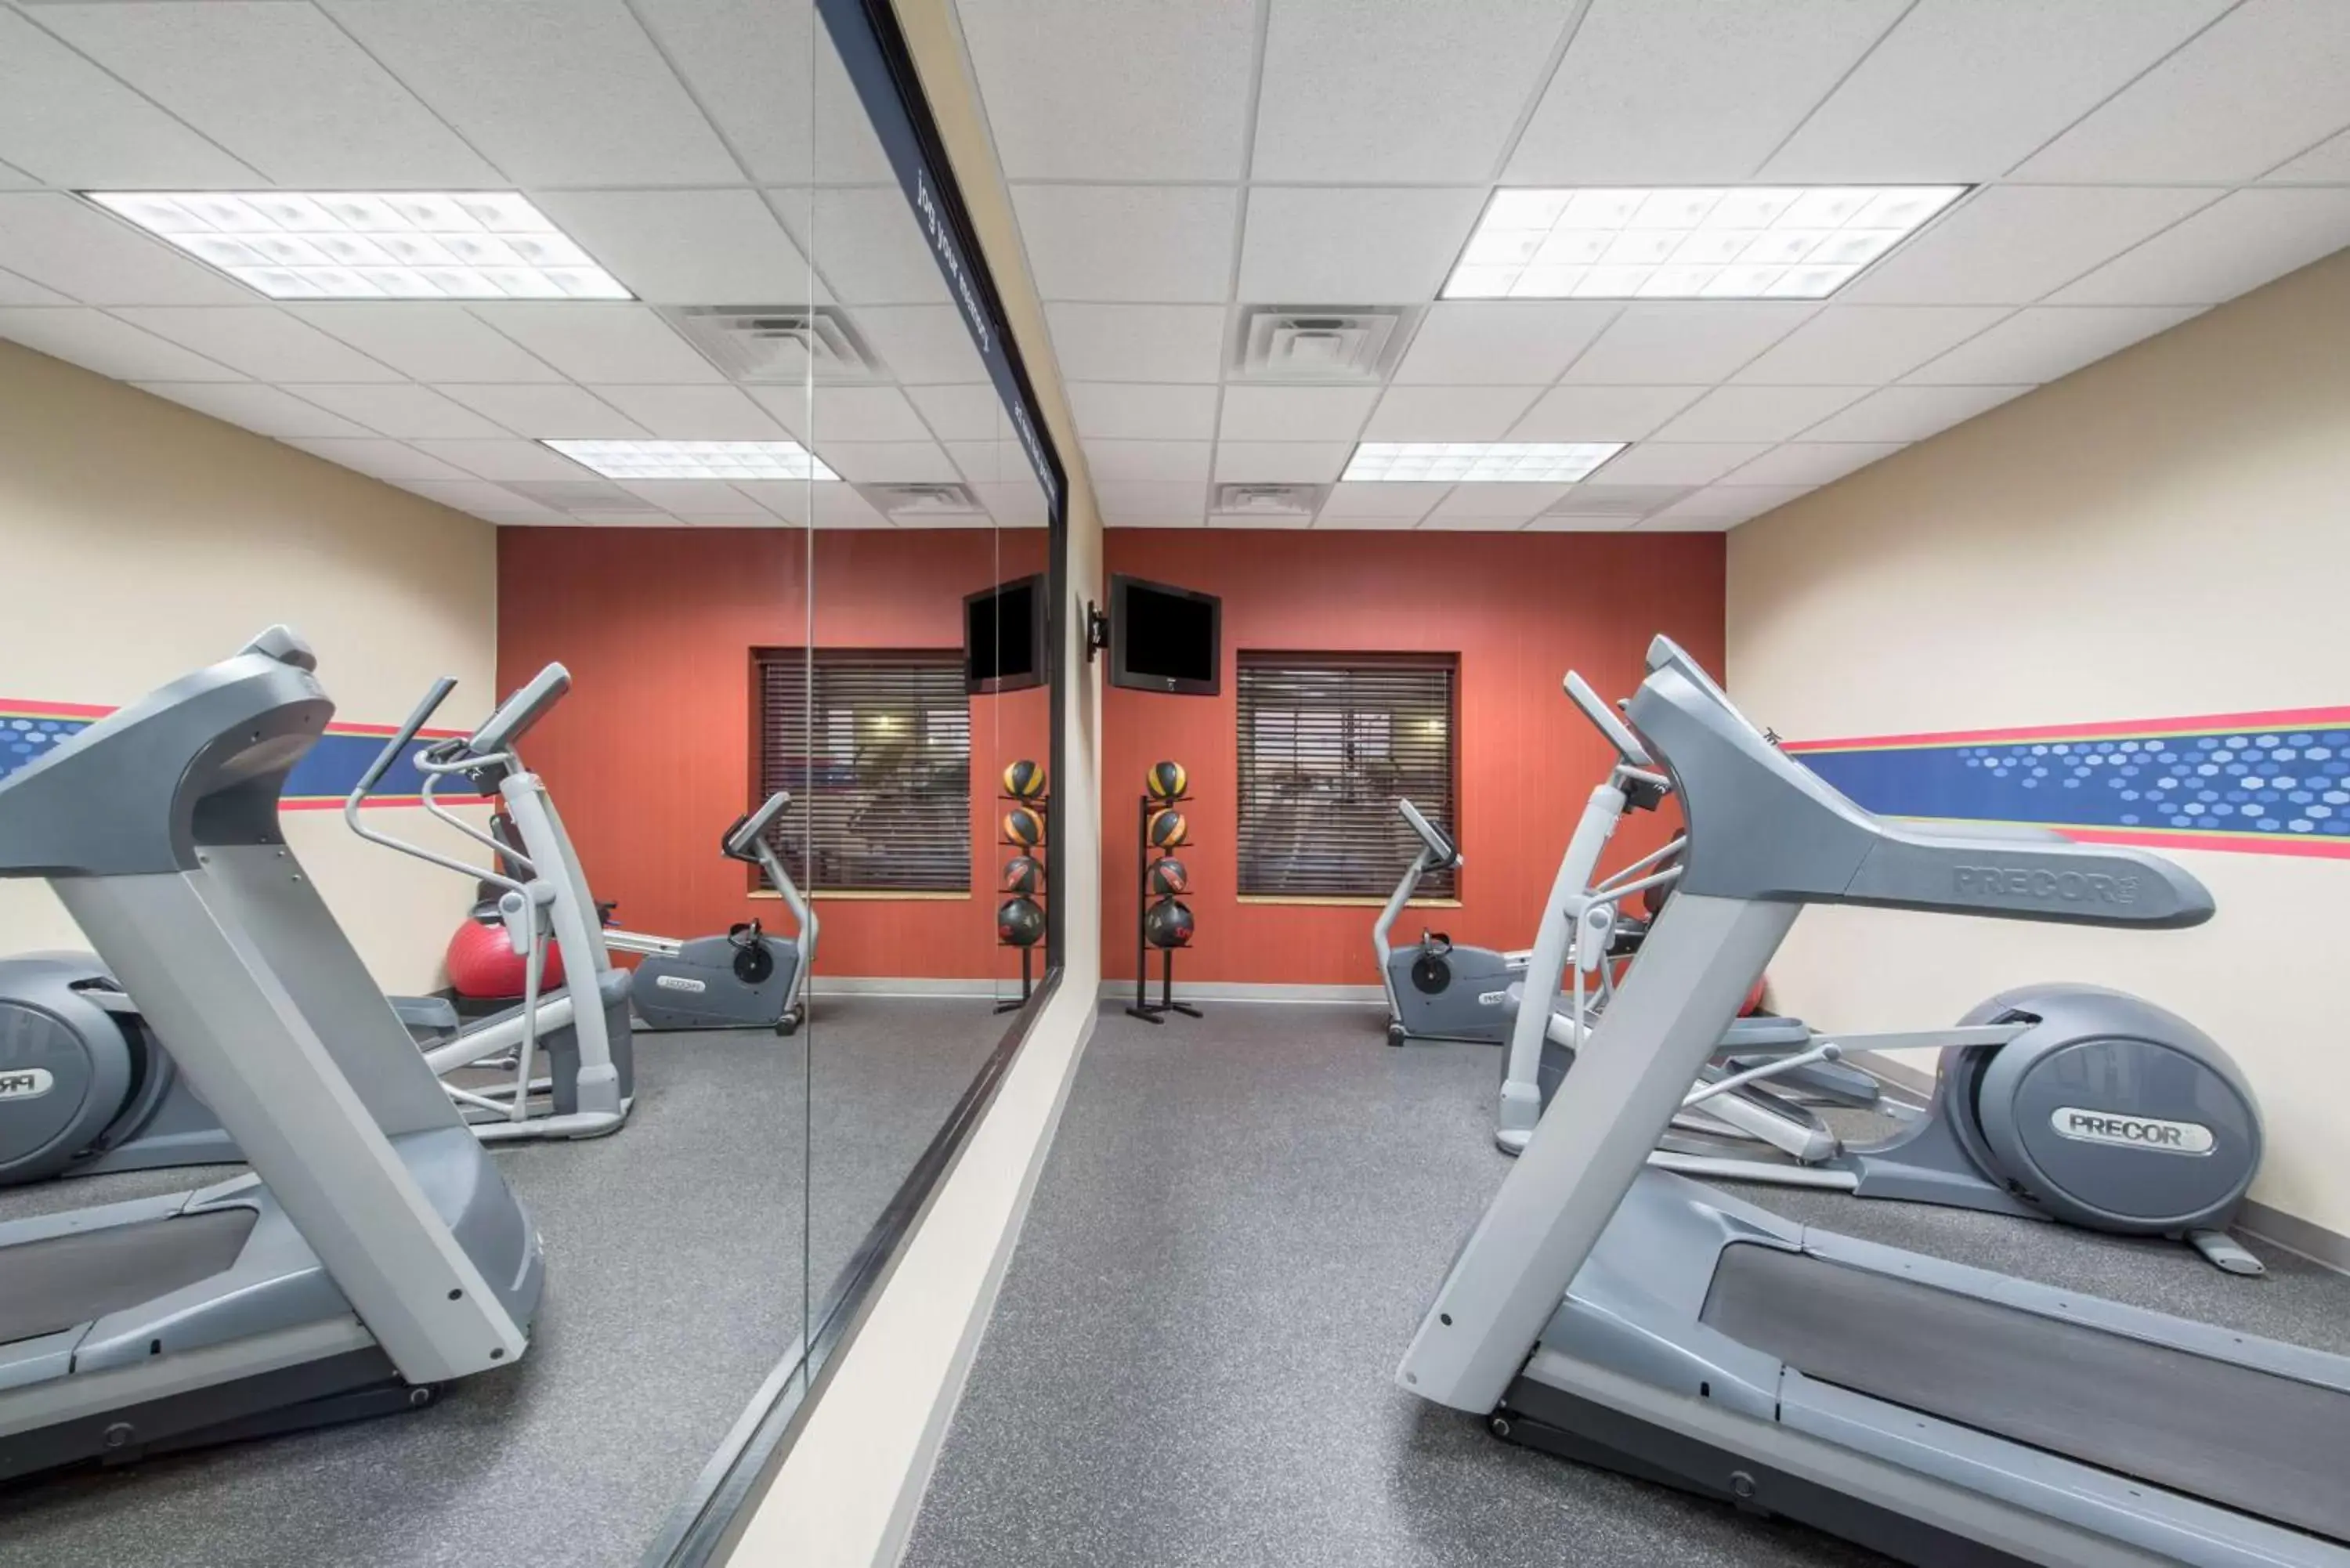 Fitness centre/facilities, Fitness Center/Facilities in Hampton Inn & Suites Oklahoma City - South